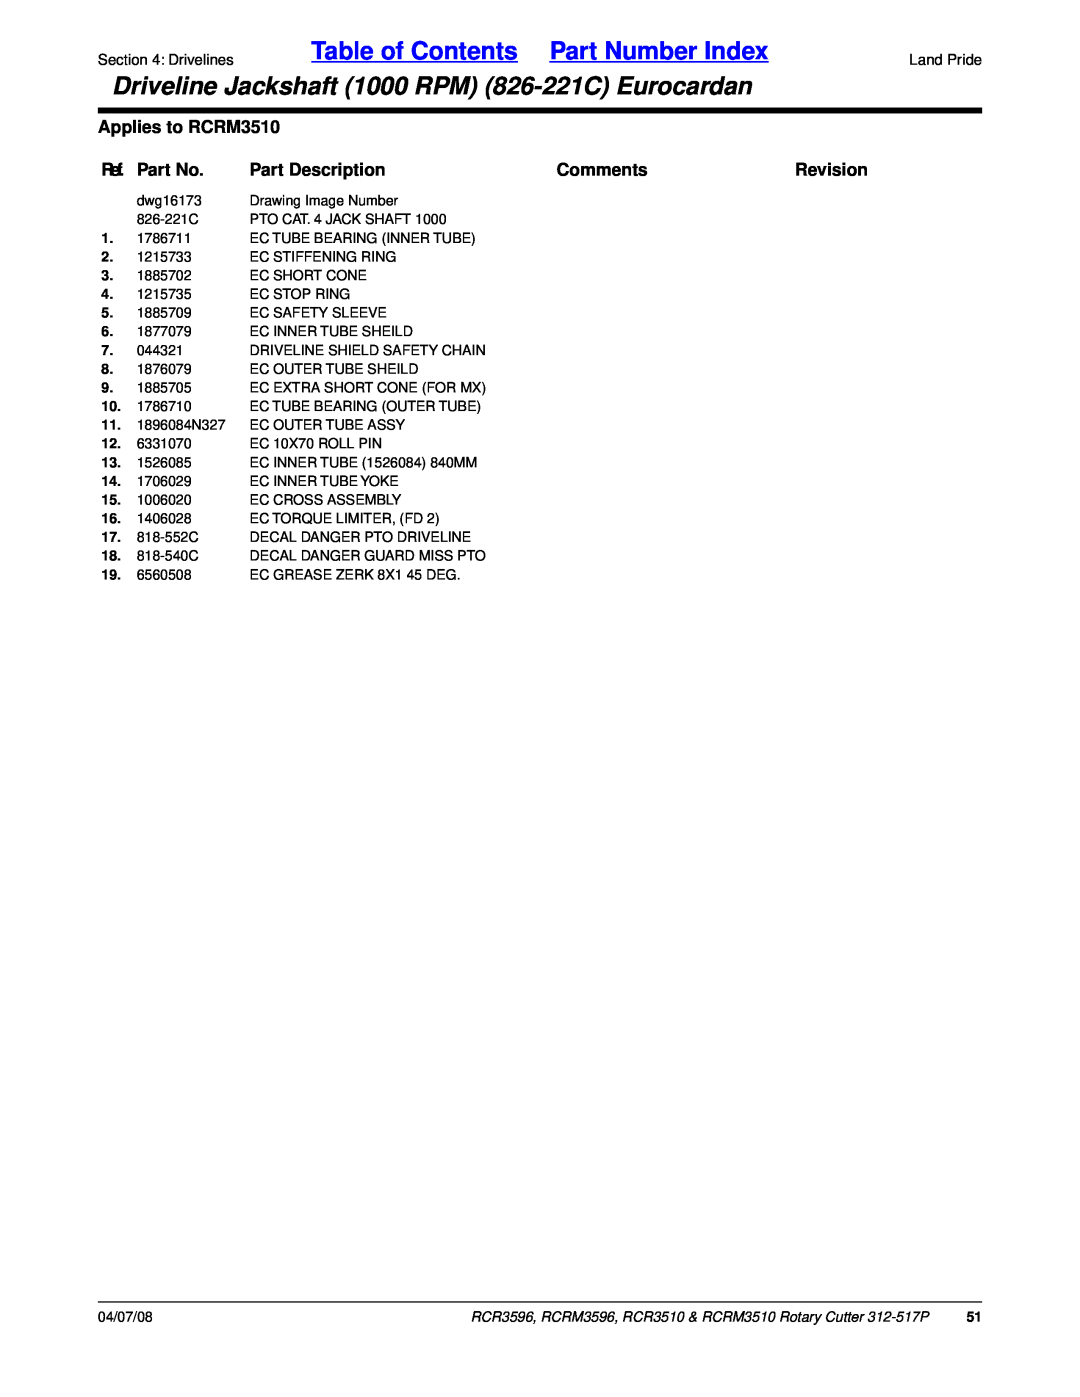 Land Pride RCR3596 Table of Contents Part Number Index, Driveline Jackshaft 1000 RPM 826-221CEurocardan, Ref. Part No 